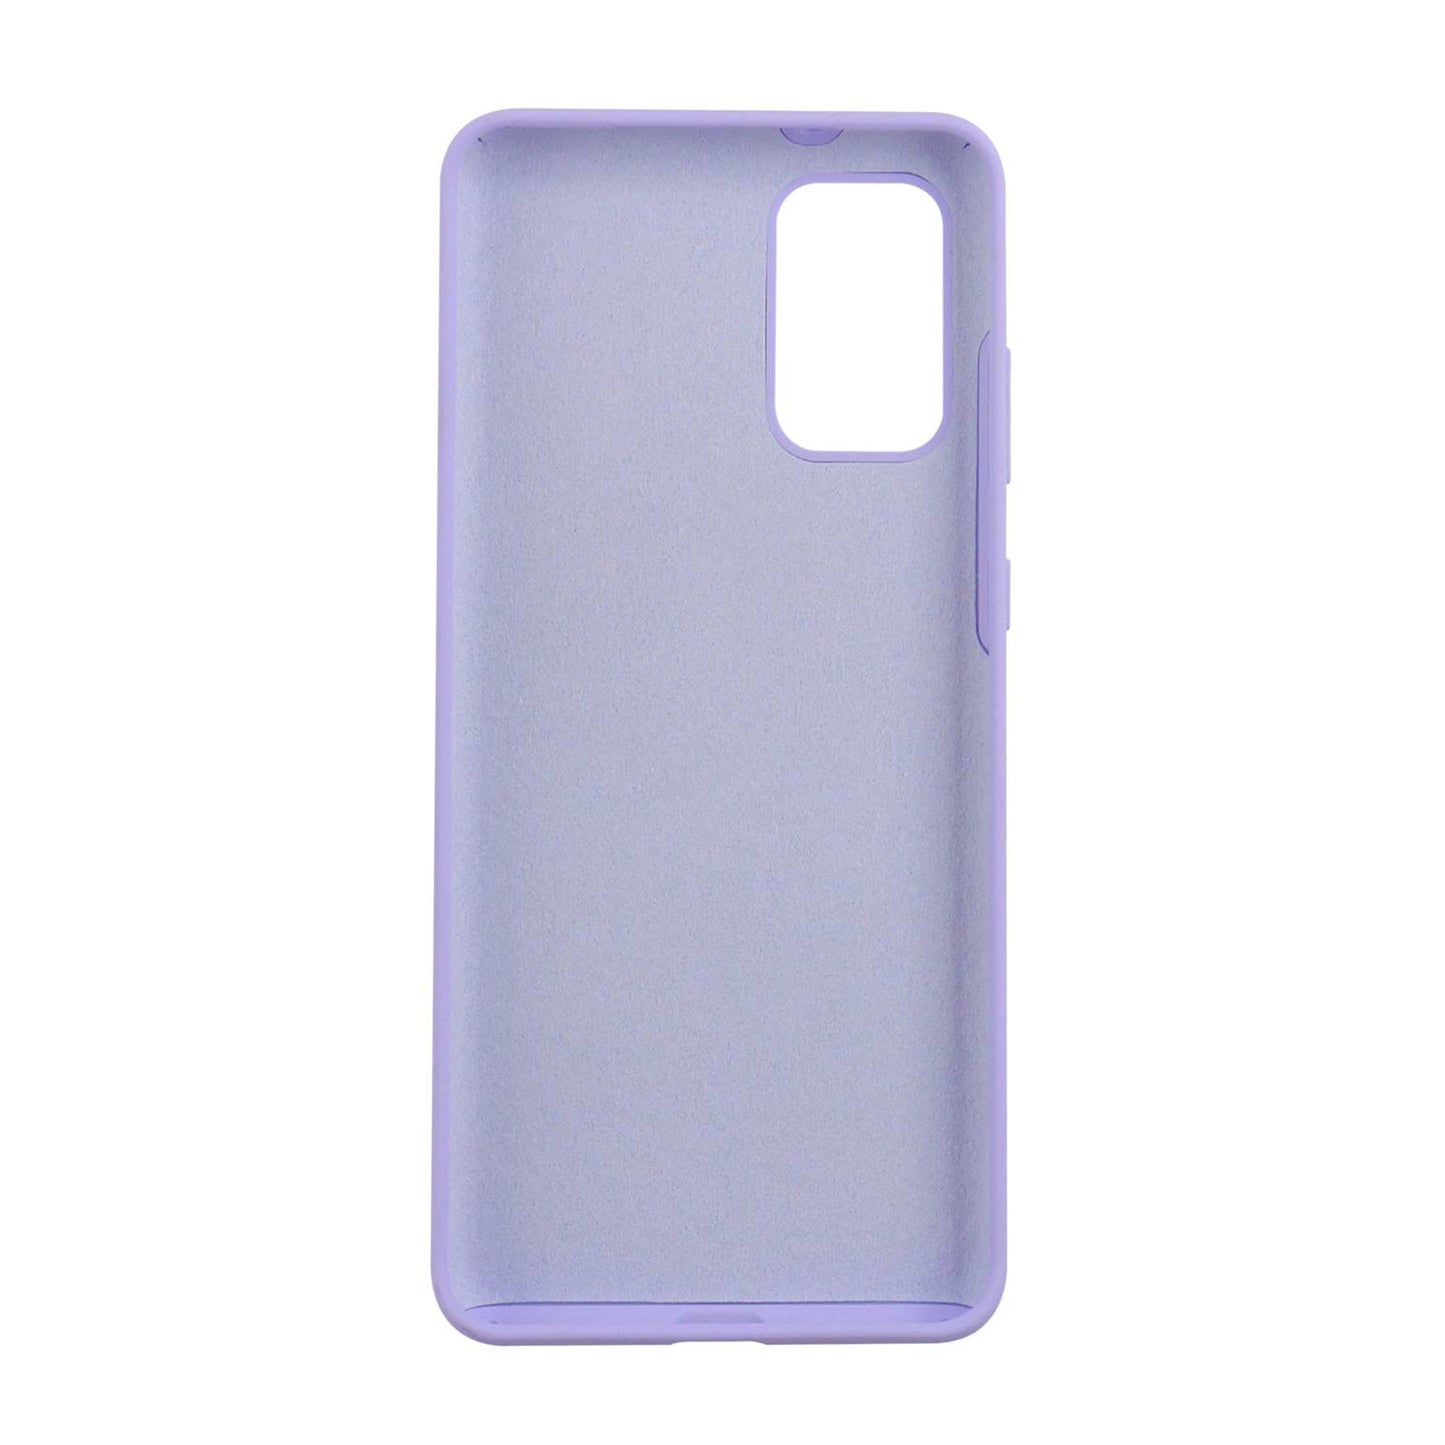 Samsung Galaxy S20 Ultra 5G Uunique Purple (Lavender) Liquid Silicone Case - 15-06635